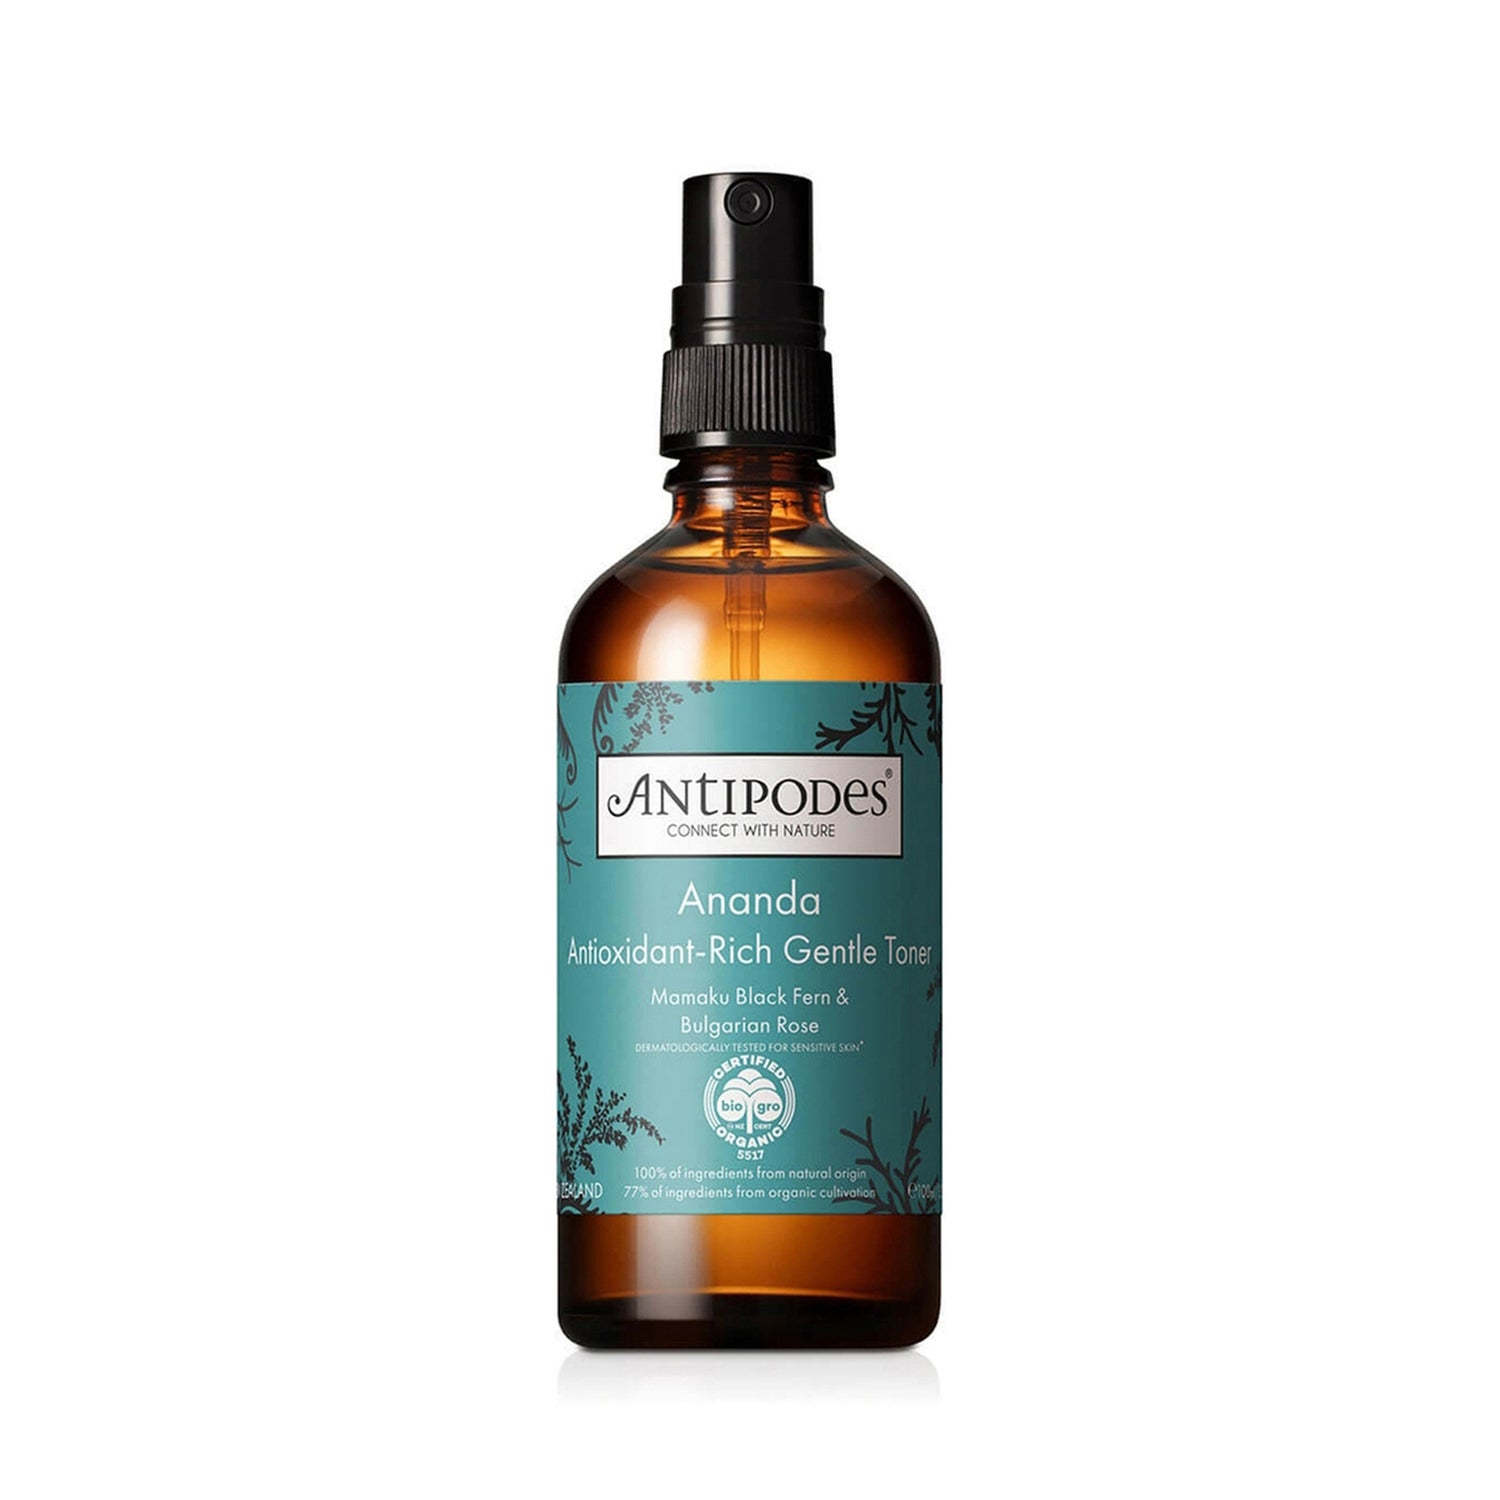 Antipodes Ananda Antioxidant-Rich Gentle Toner 100 ml